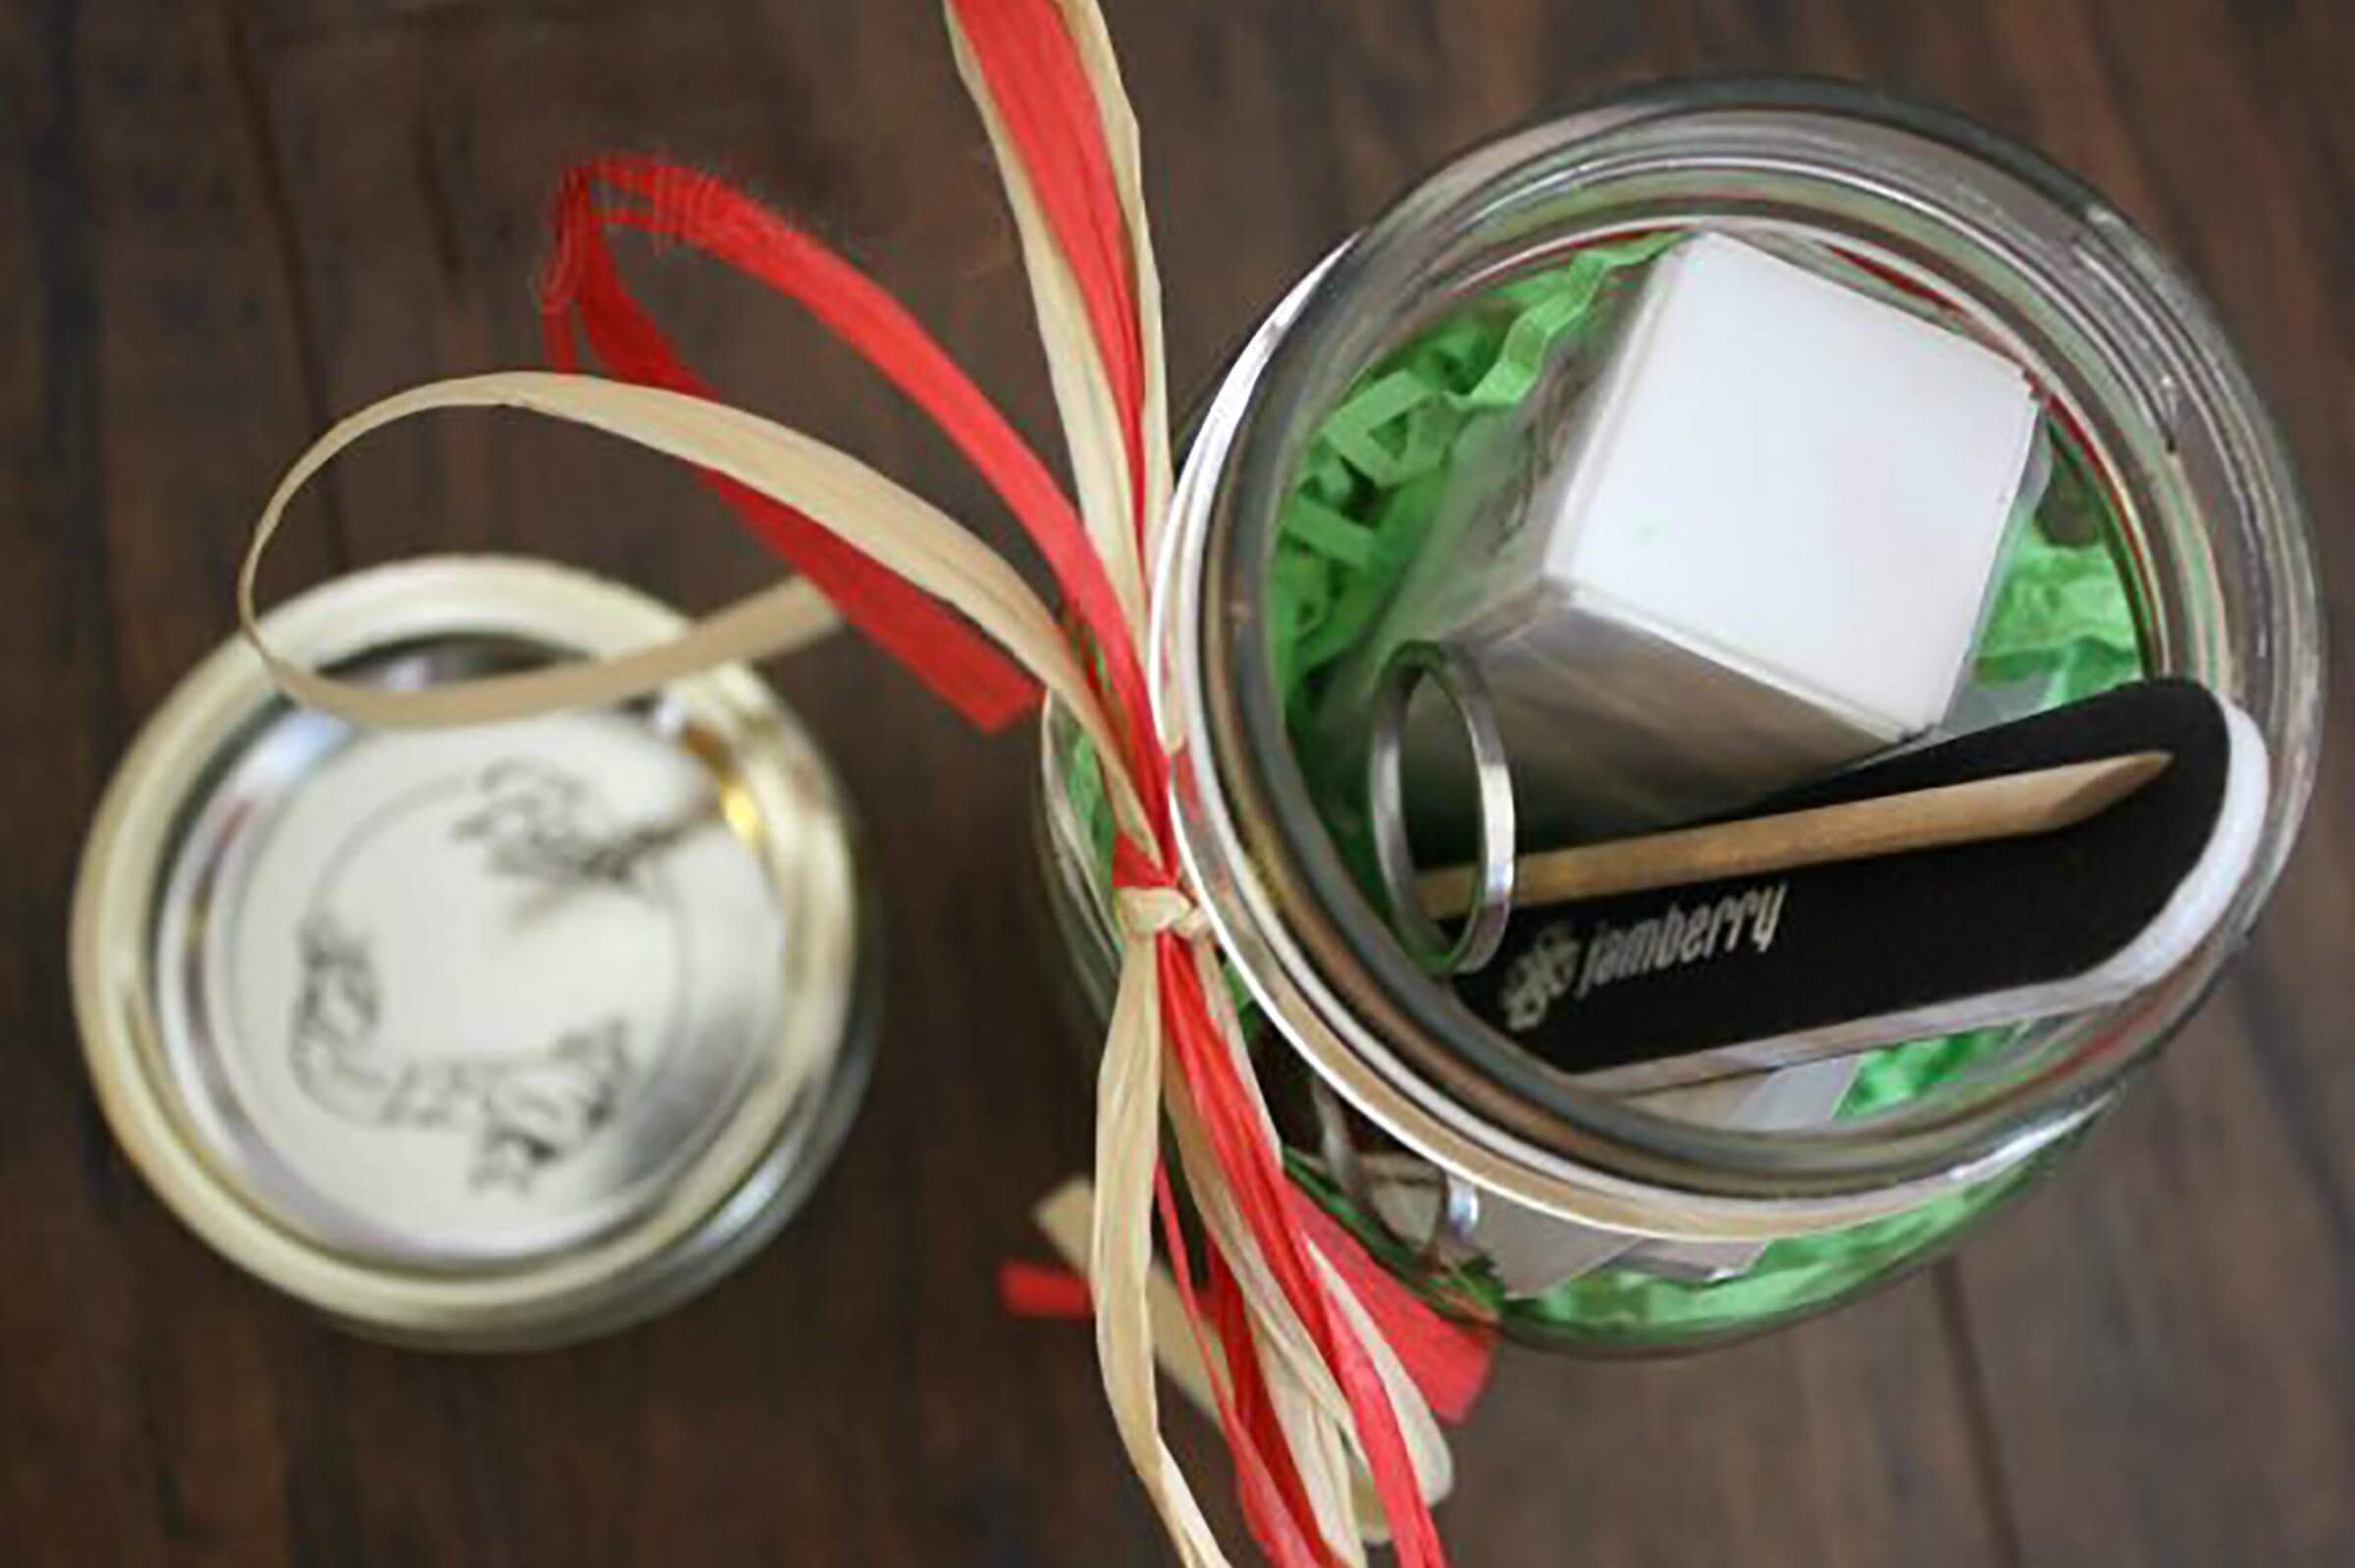 68 DIY Christmas Gifts for Everyone 2022 — Homemade Holiday Gifts